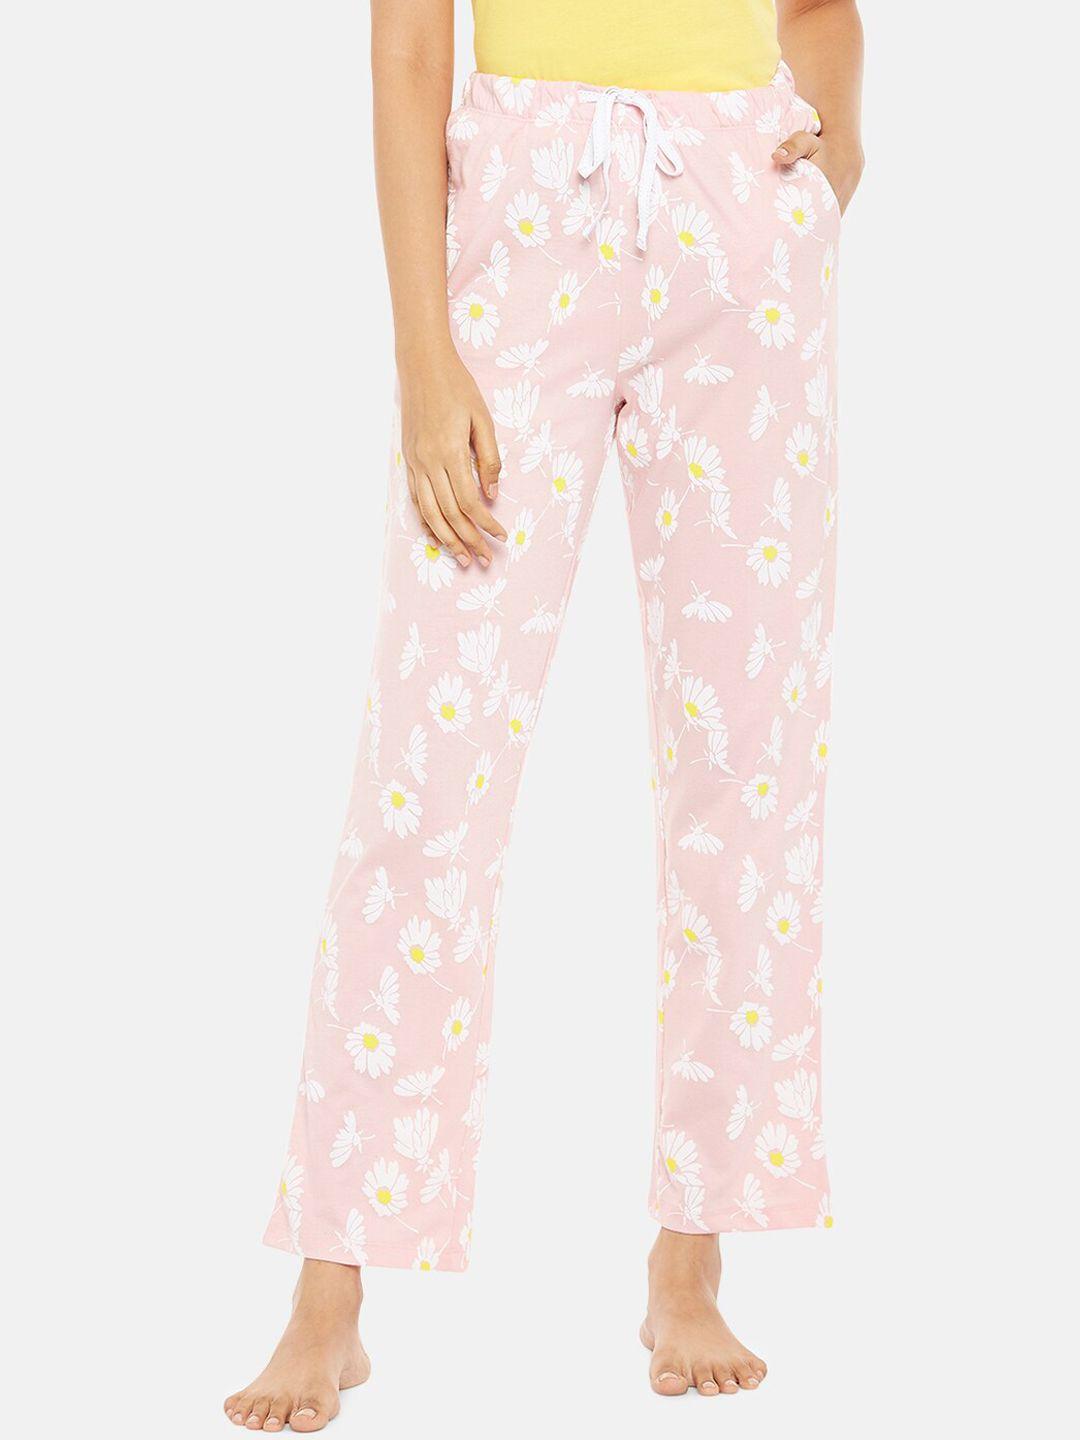 dreamz by pantaloons women pink printed pyjamas